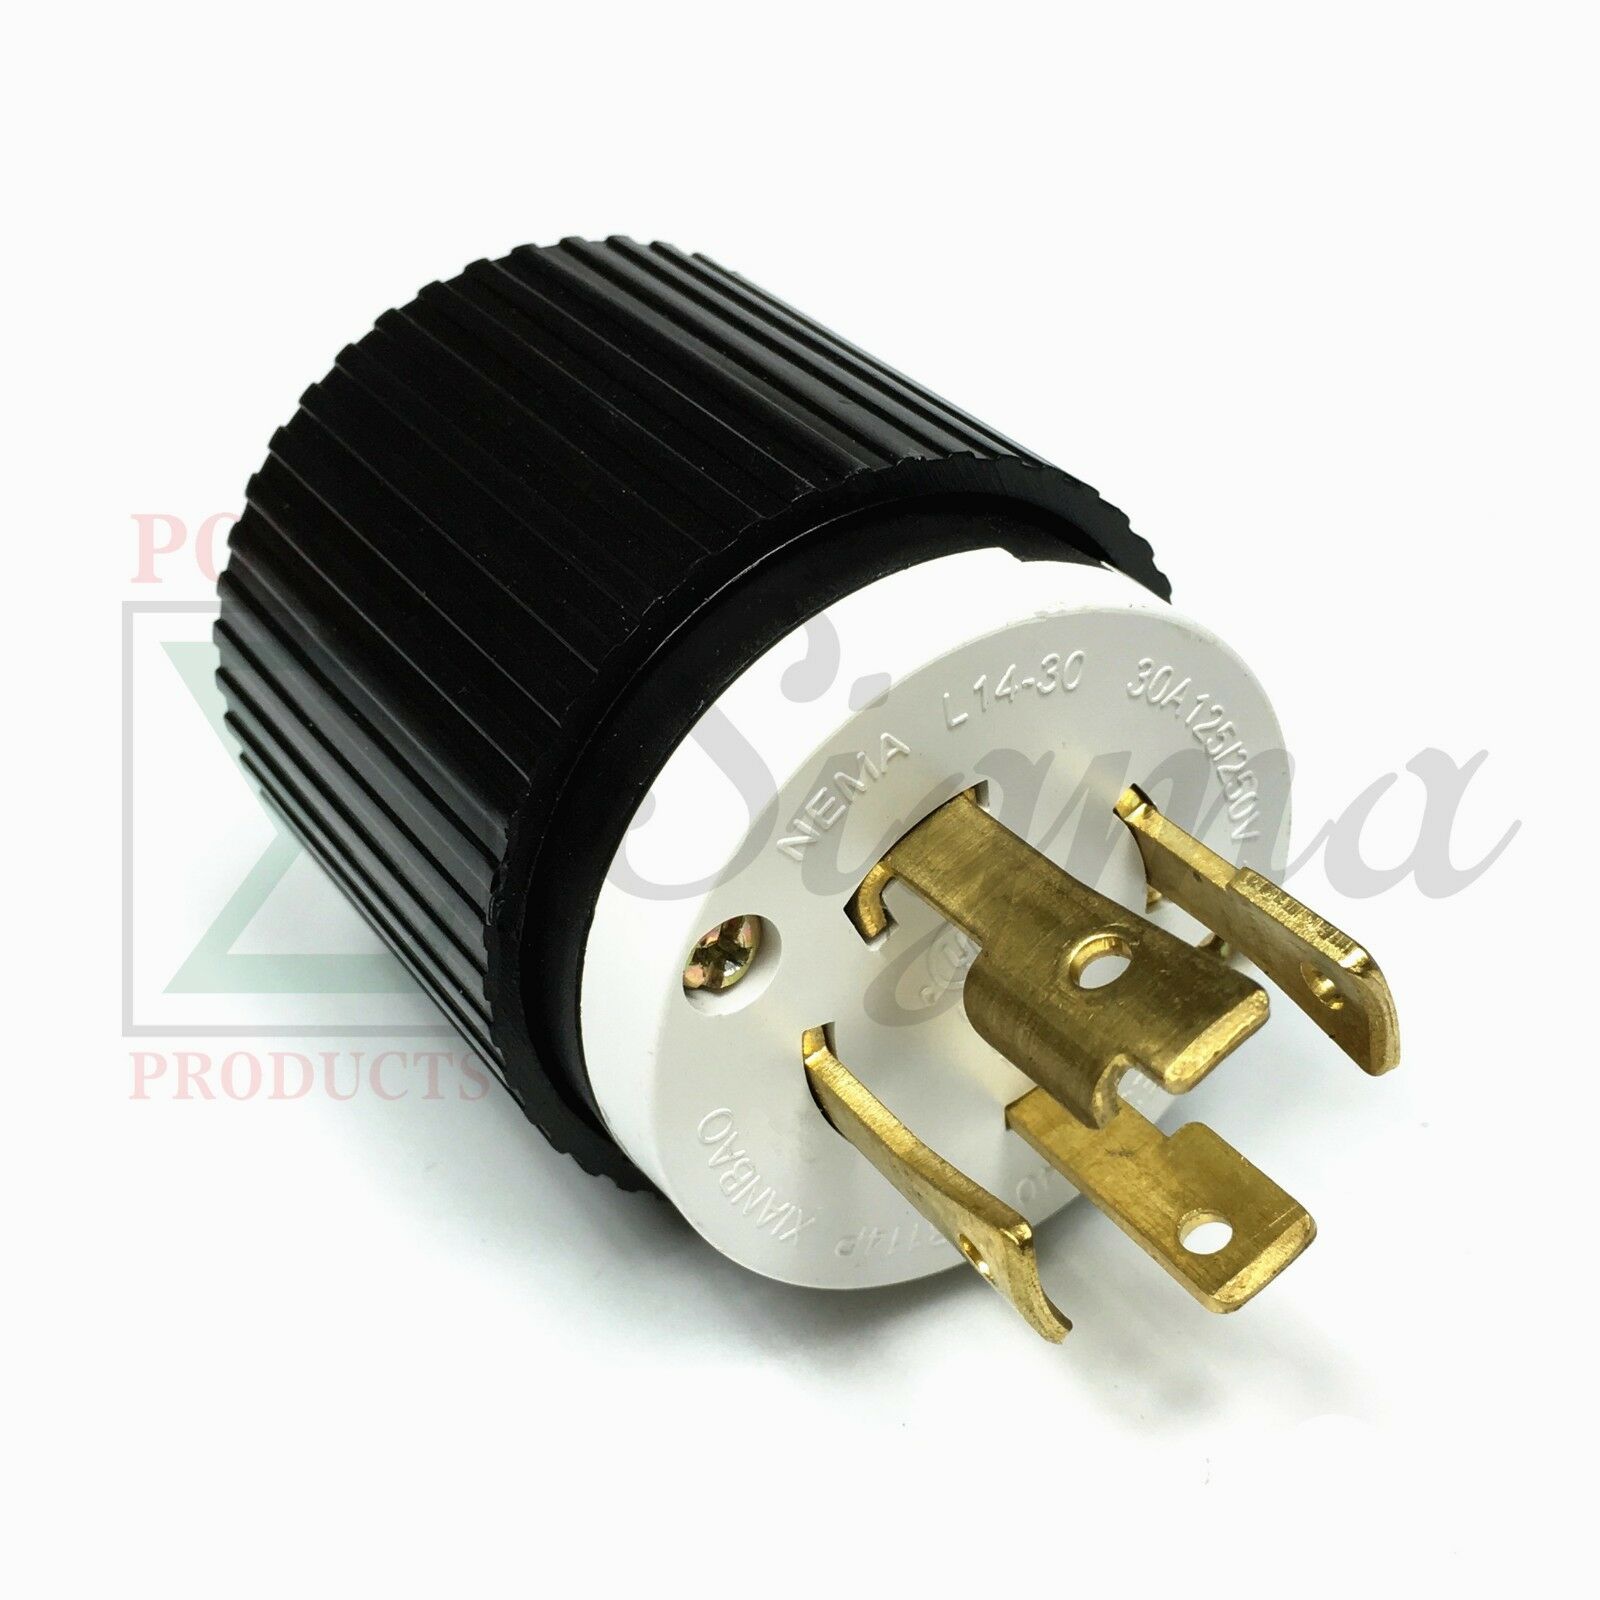 Nema L14-30p Ul Listed Male Locking Generator Plug 30a 125/250v 3 Pole 4 Wires